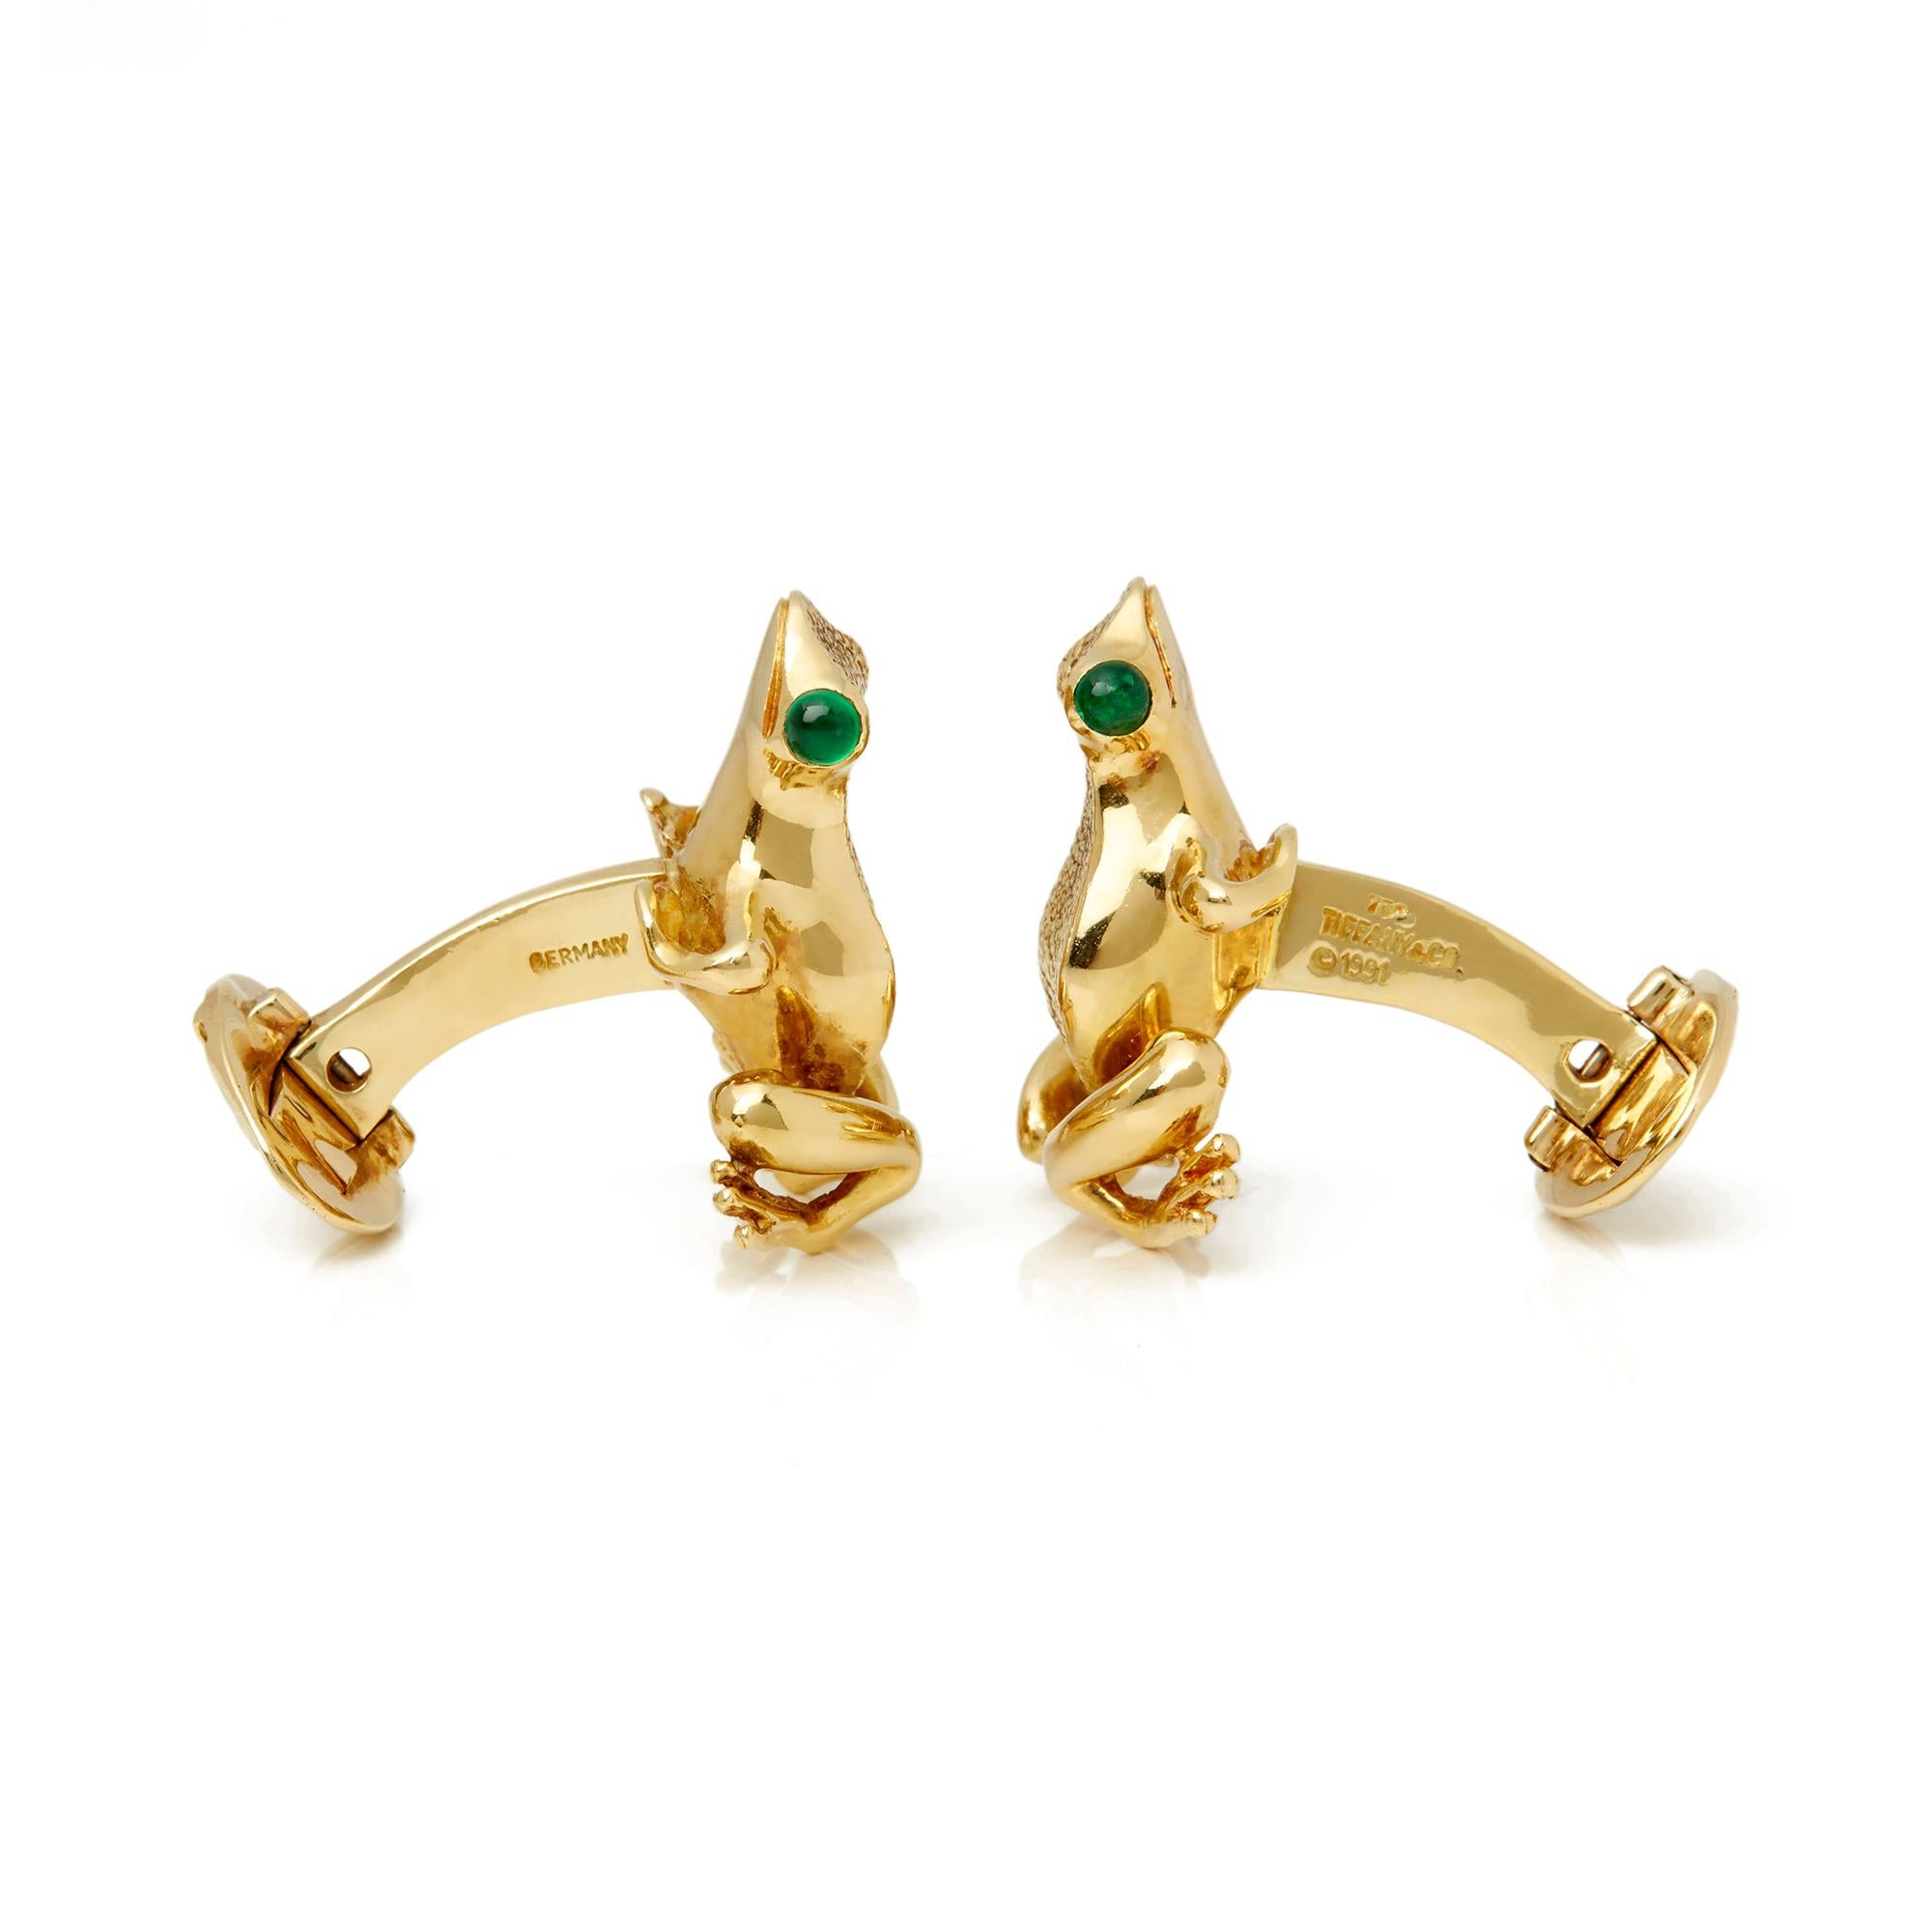 Code: COM2138
Brand: Tiffany & Co.
Description: 18k Yellow Gold Cabochon Emerald Frog Cufflinks
Accompanied With: Presentation Box
Gender: Mens
Cufflinks Length: 2.5cm
Cufflinks Width: 2cm
Condition: 8.5
Material: Yellow Gold
Total Weight: 21.47g
